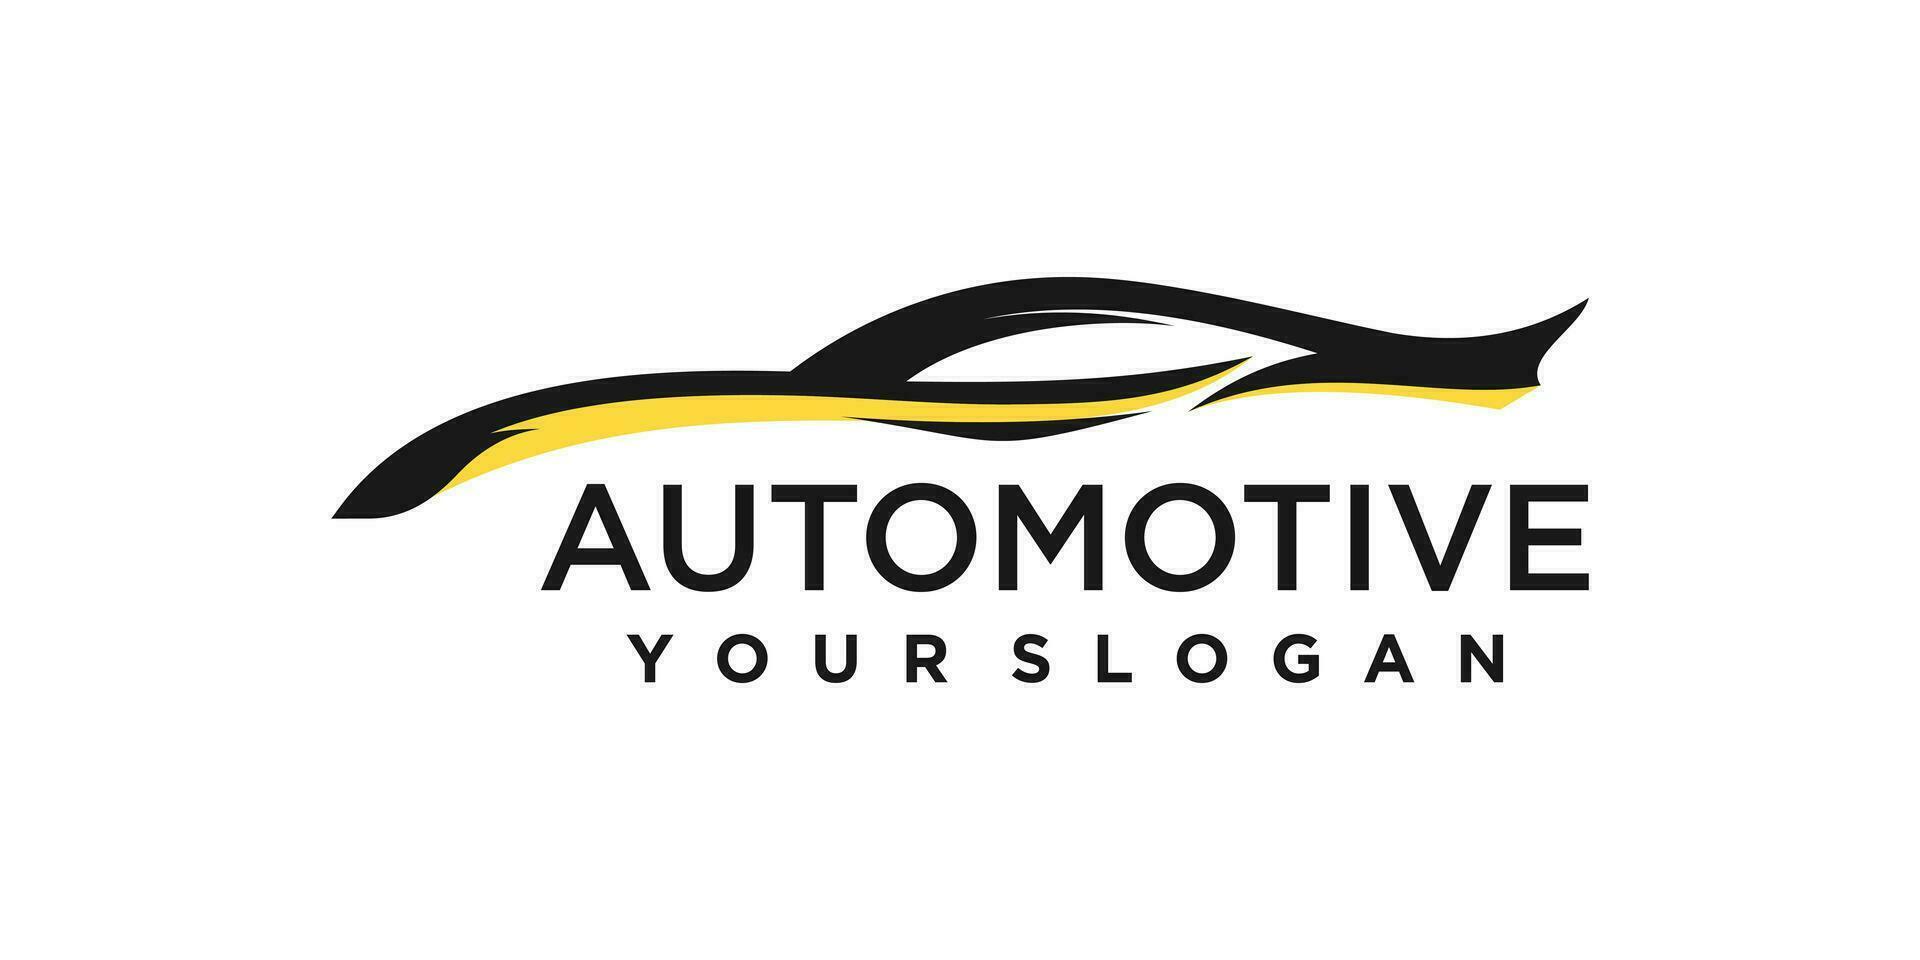 Automotive logo design with modern creative idea vector